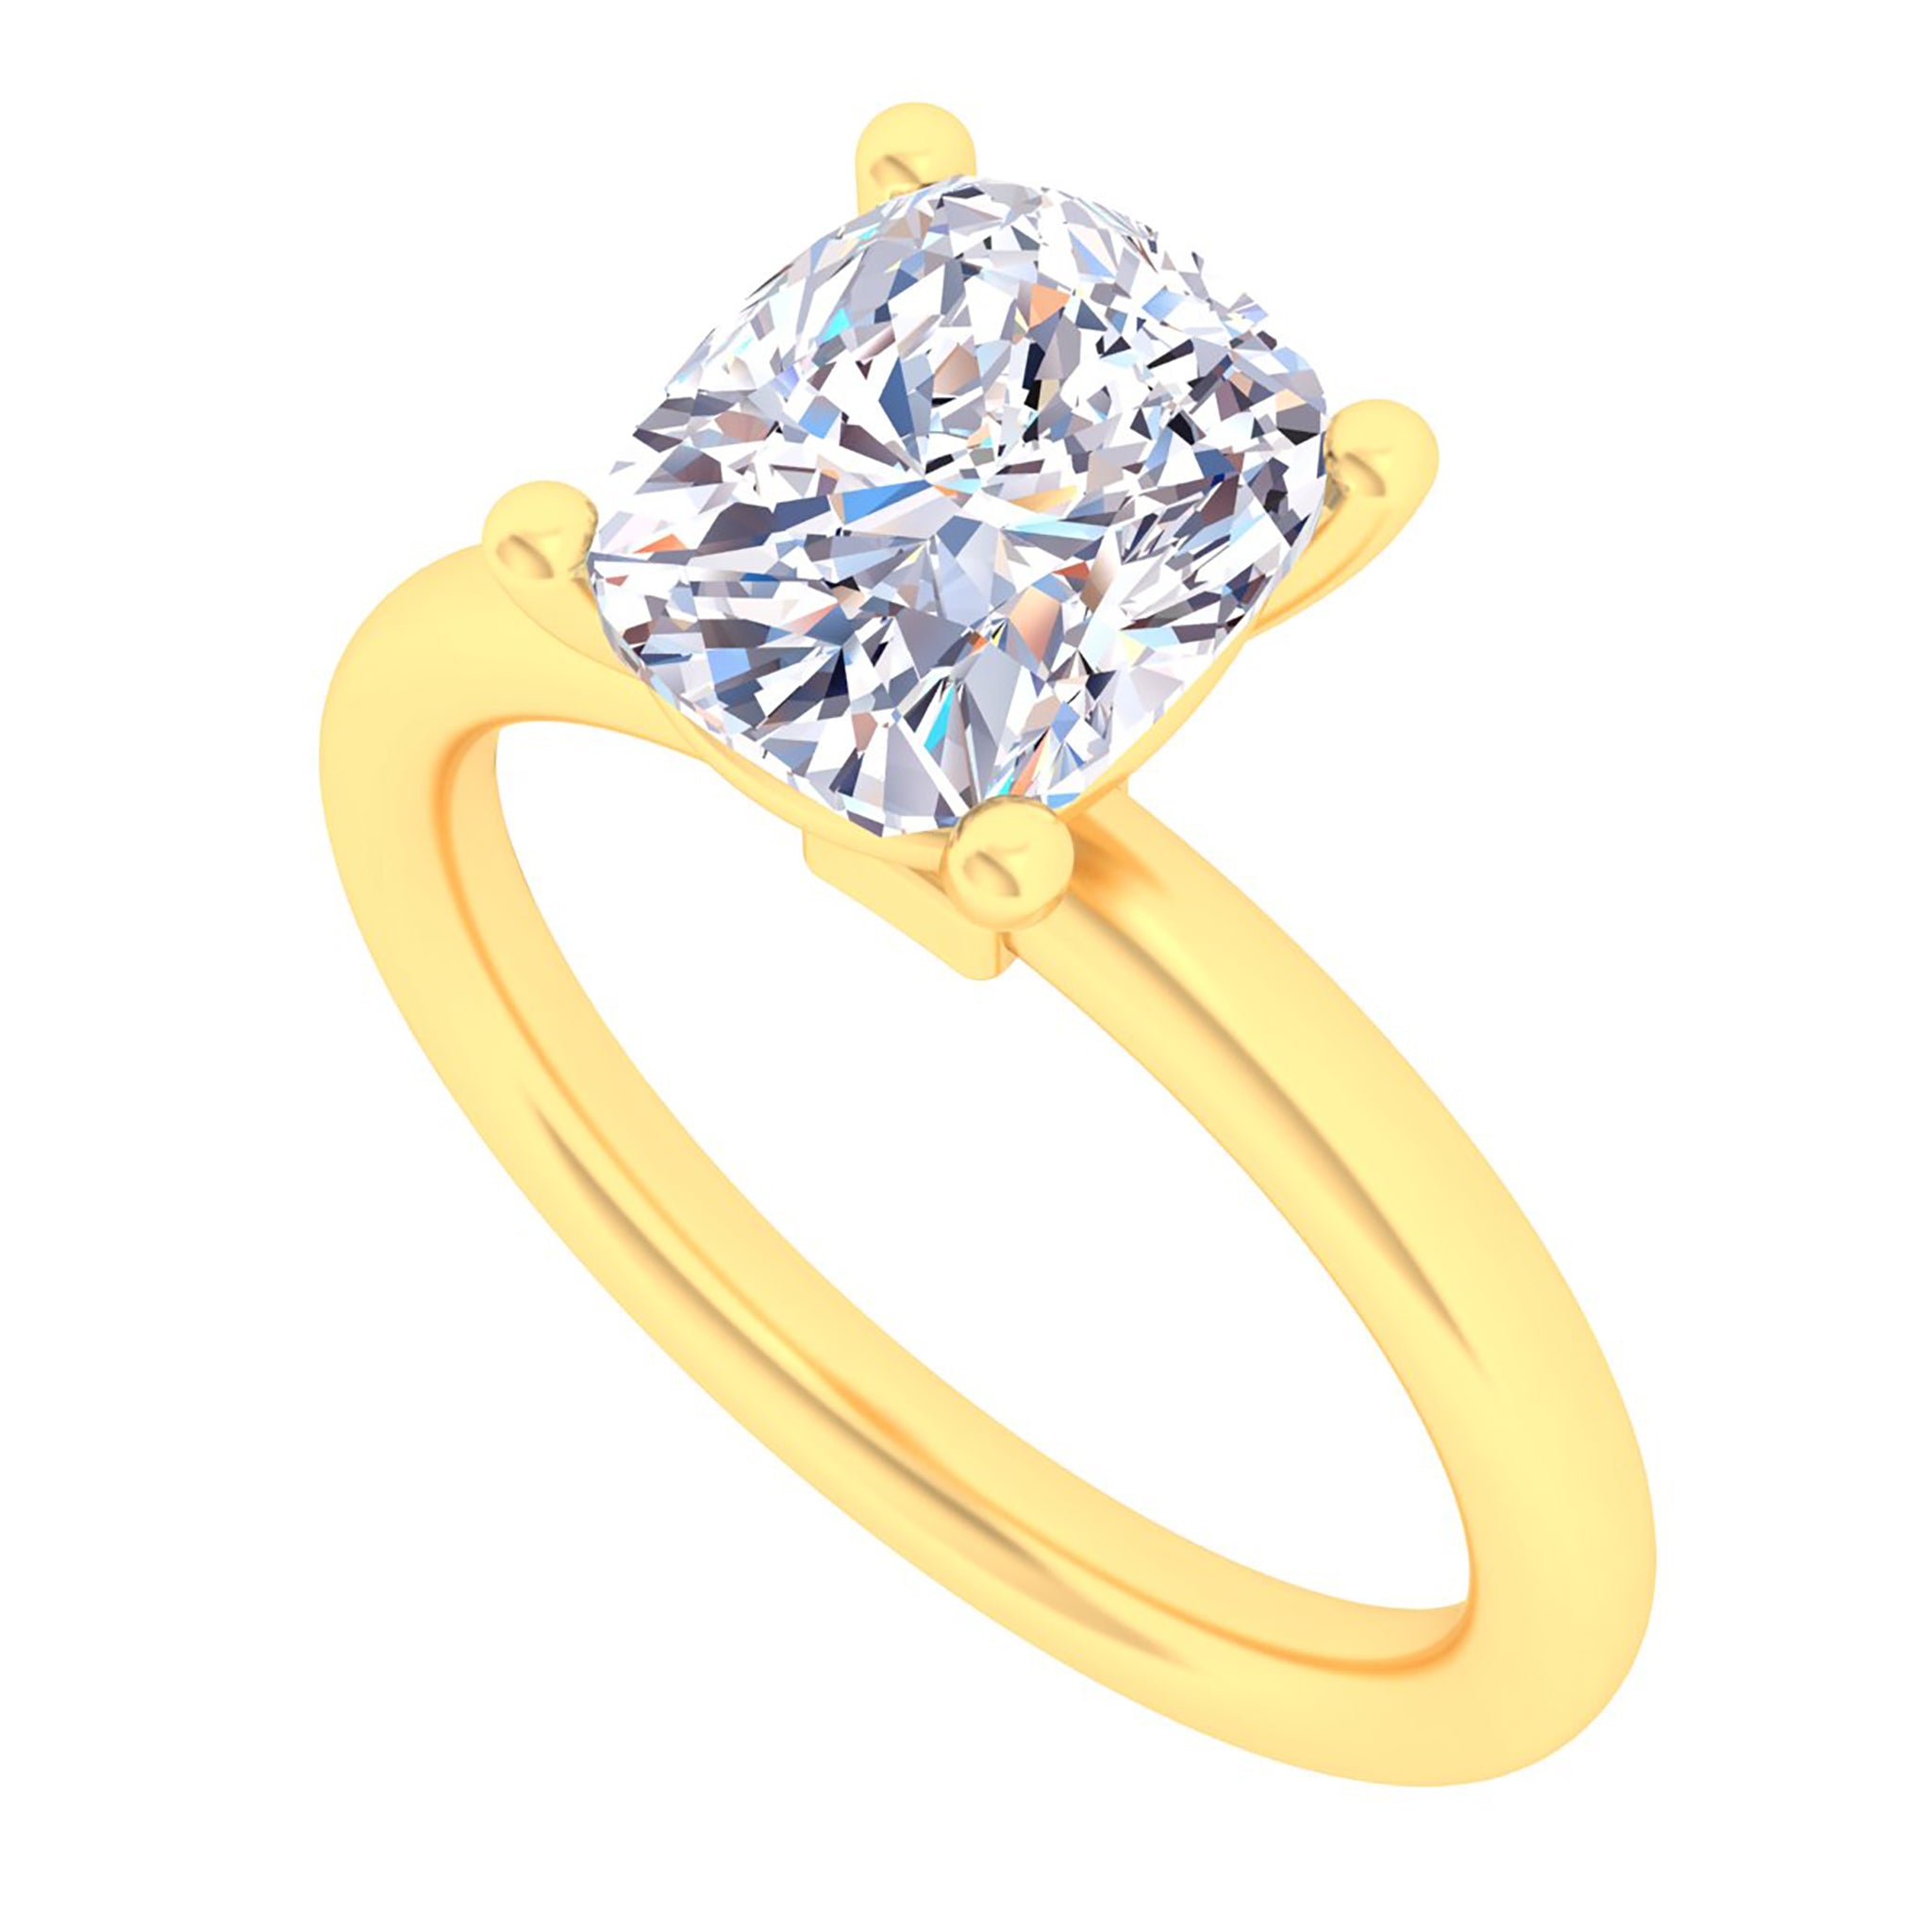 Samantha Hoopes' Emerald Cut Diamond Ring